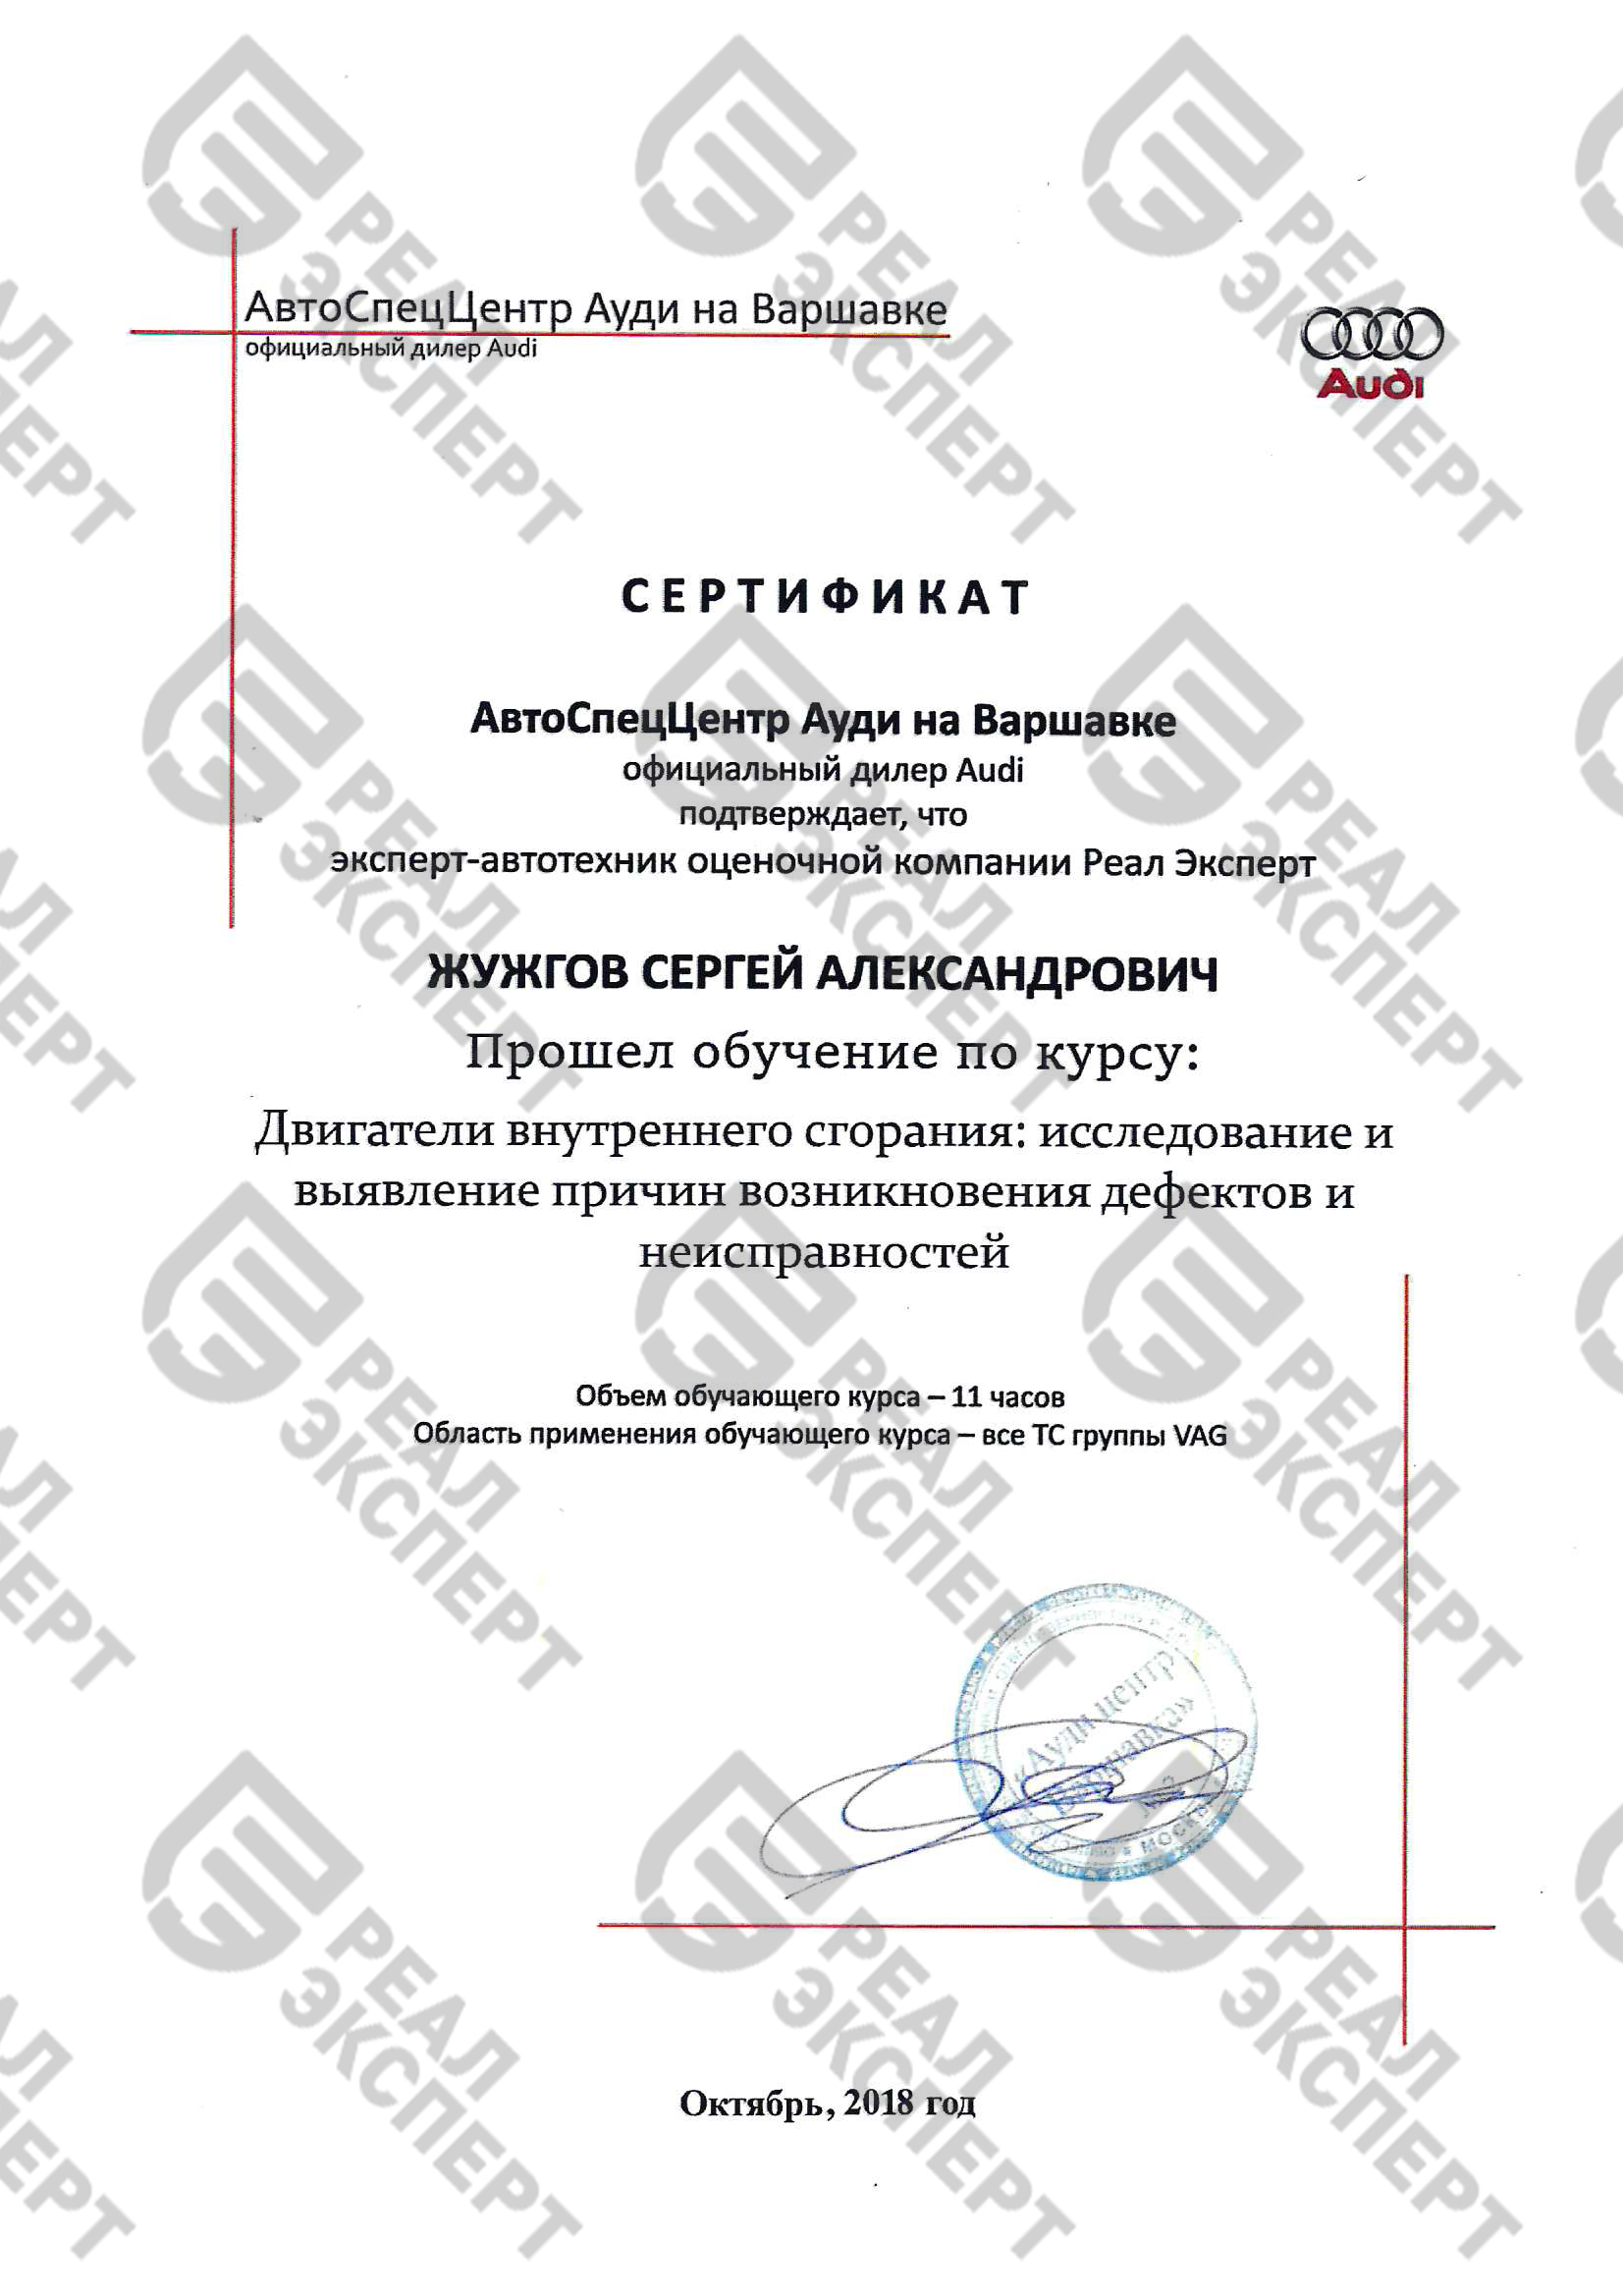 Сертификат от компании AUDI (ДВС)